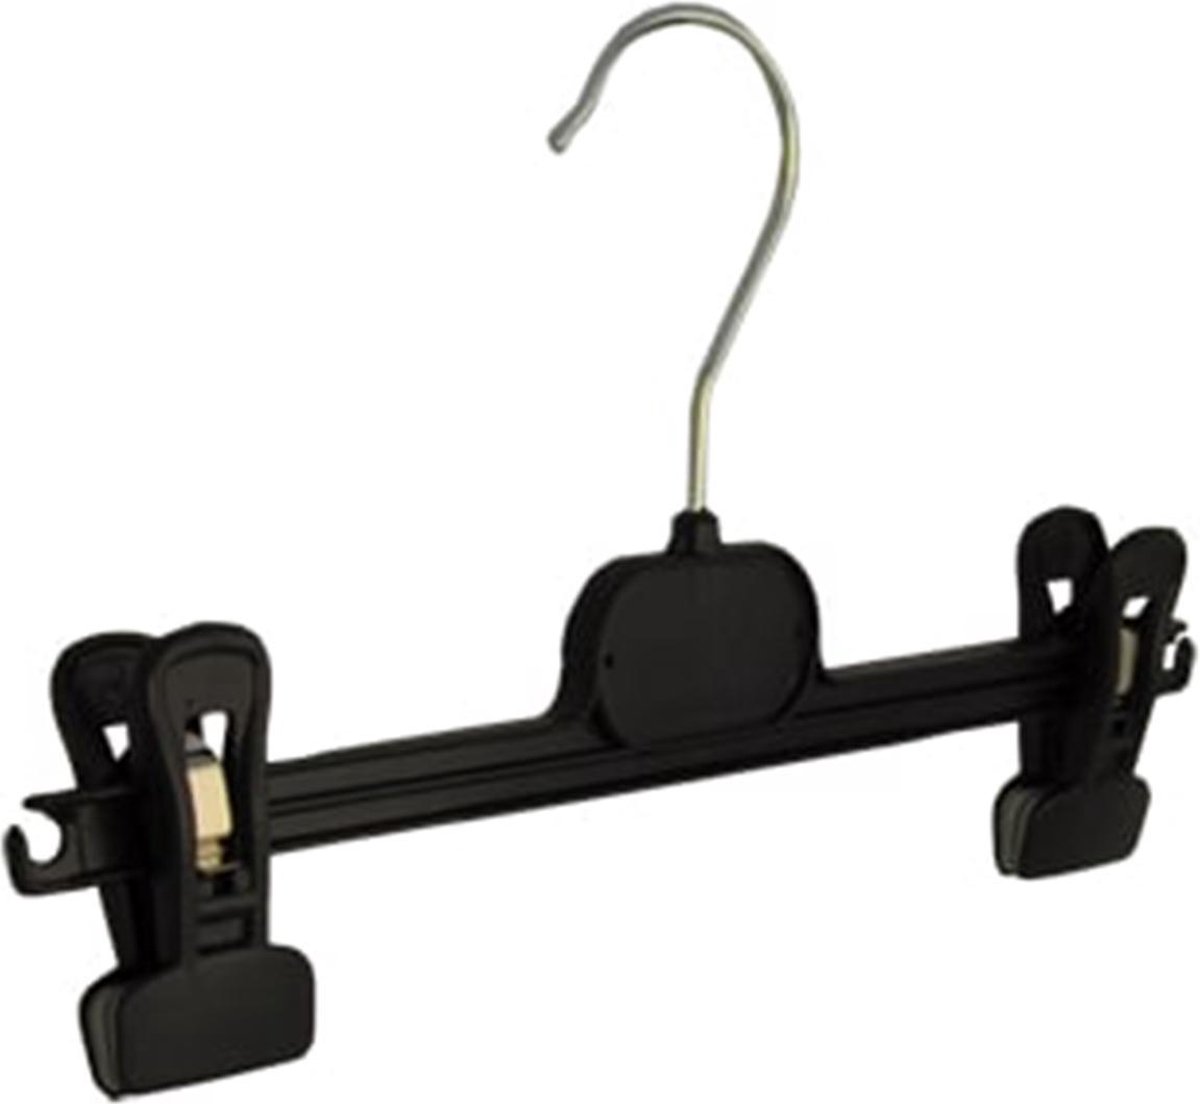 De Kledinghanger Gigant - 10 x Rokhanger / broekhanger / pantalonhanger / knijperhanger (PG30) kunststof zwart met anti-slip knijpers, 30 cm